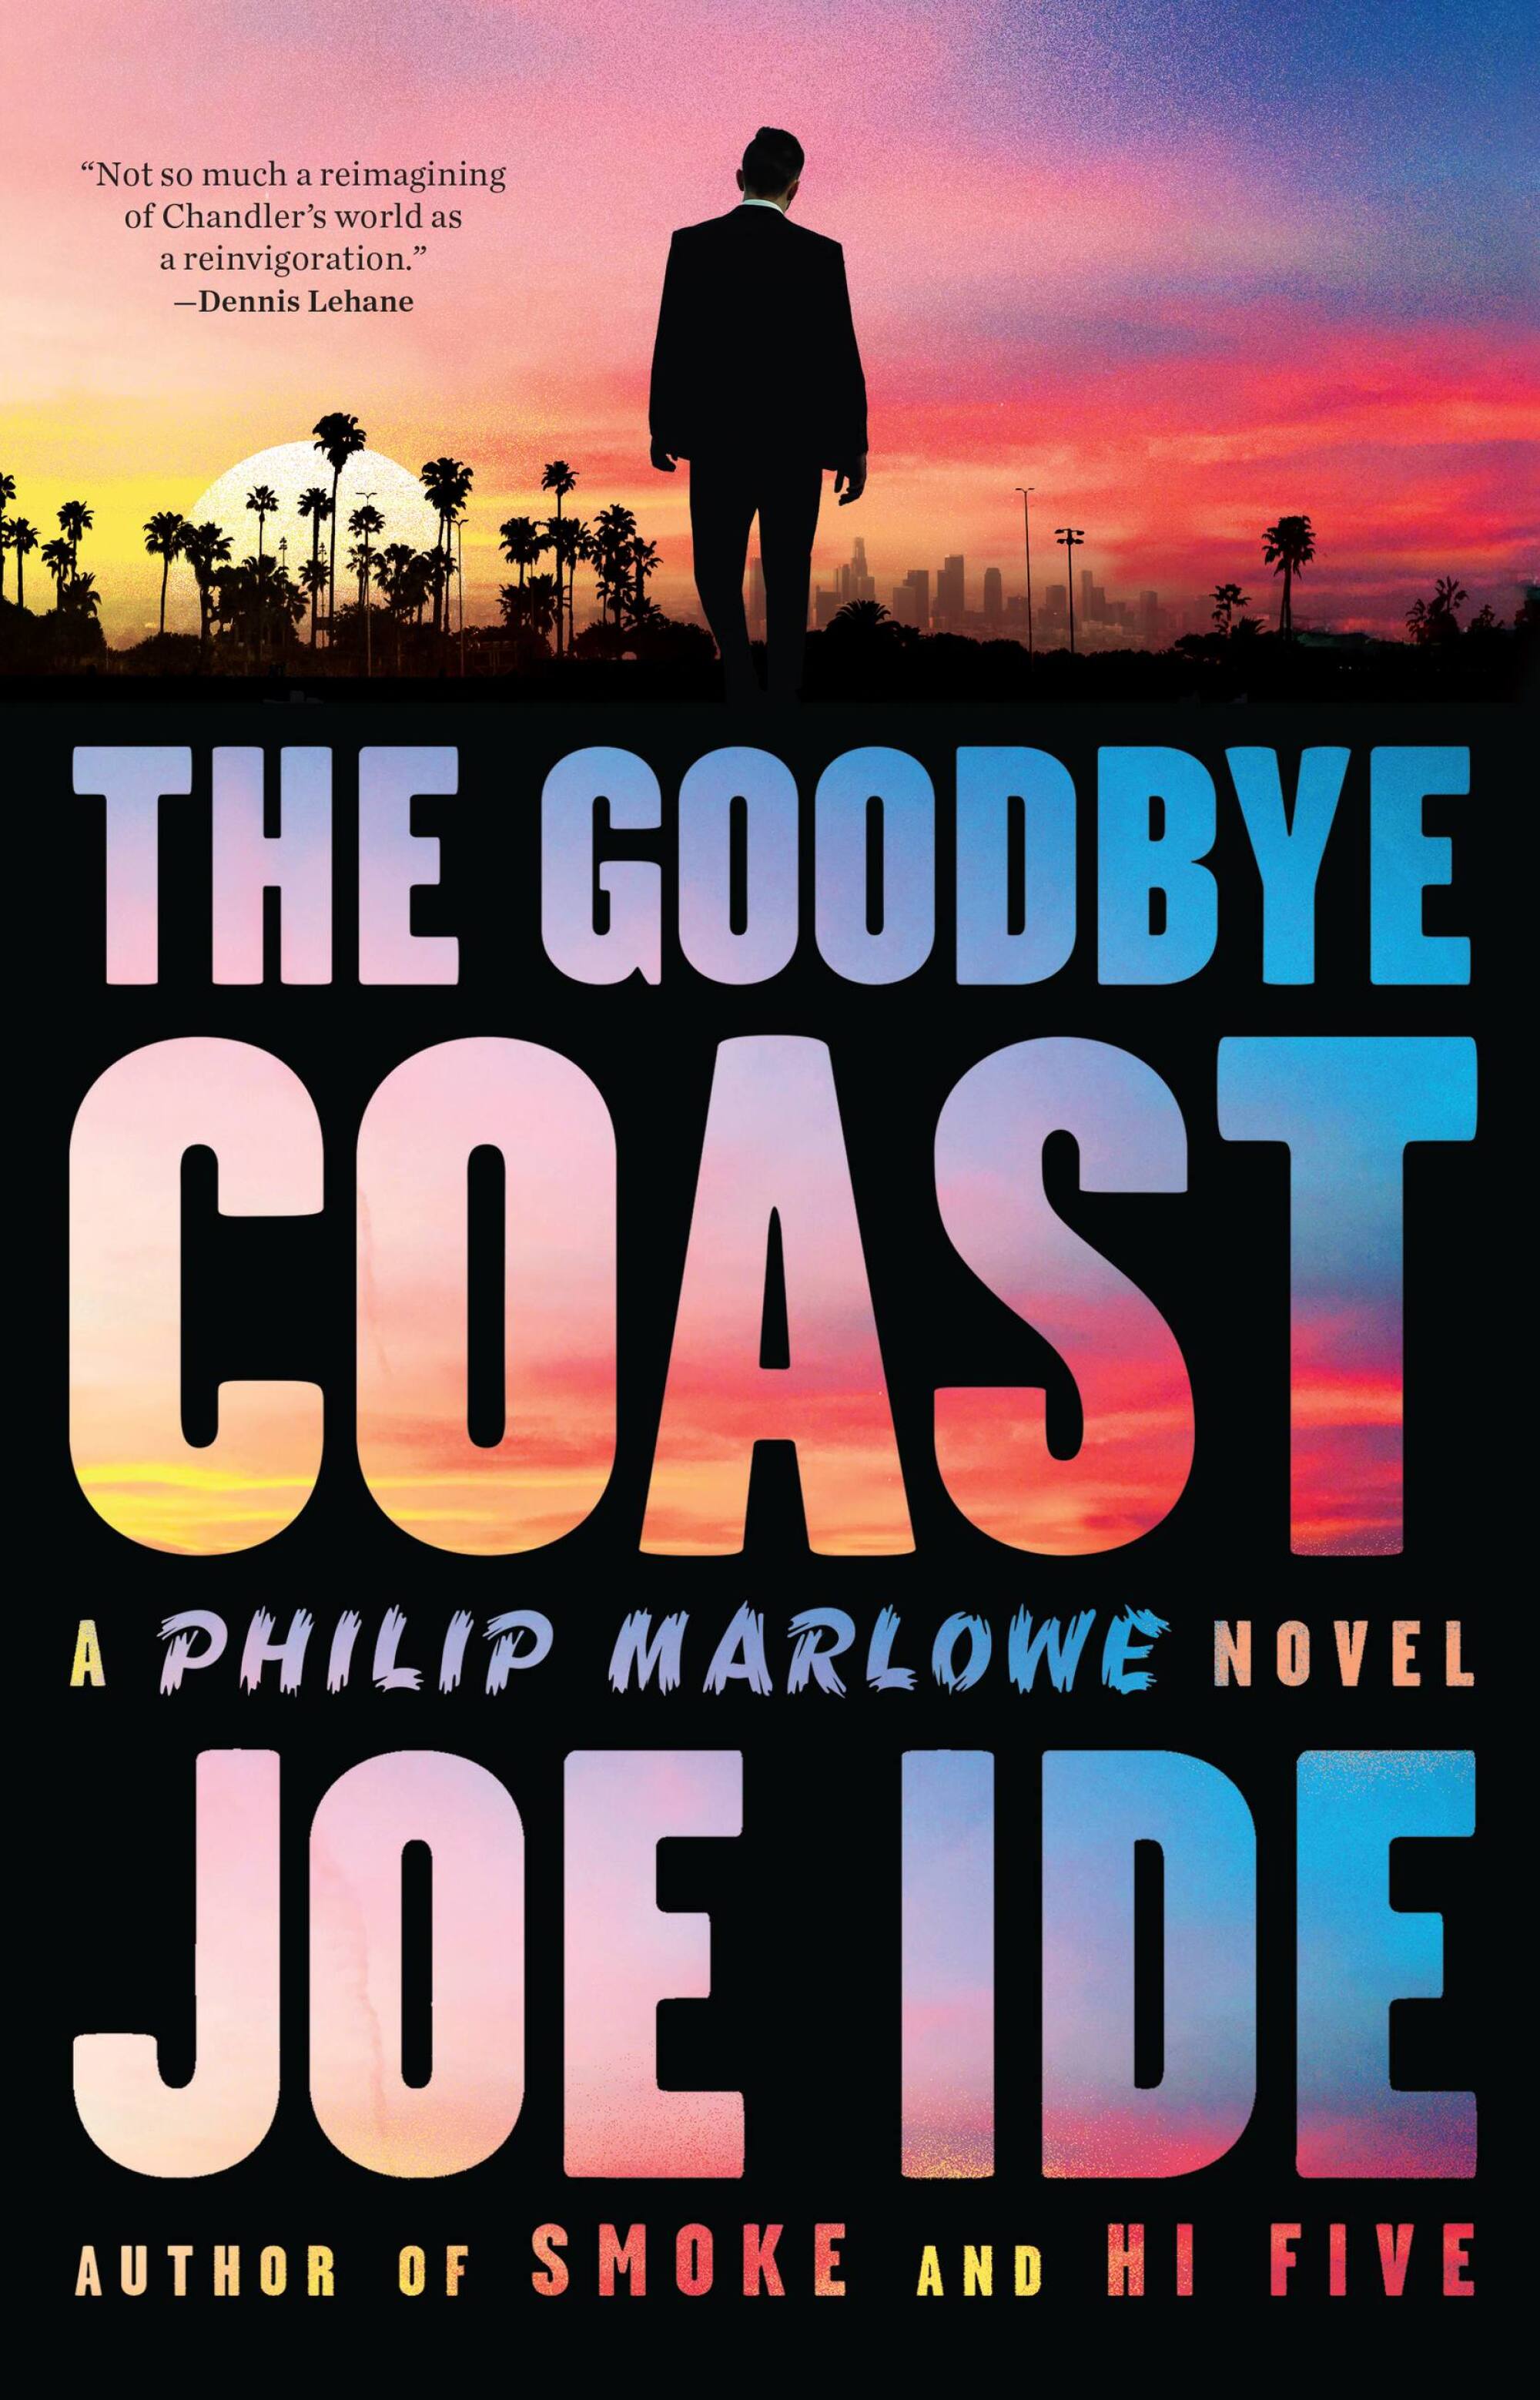 "The Goodbye Coast" by Joe Ide